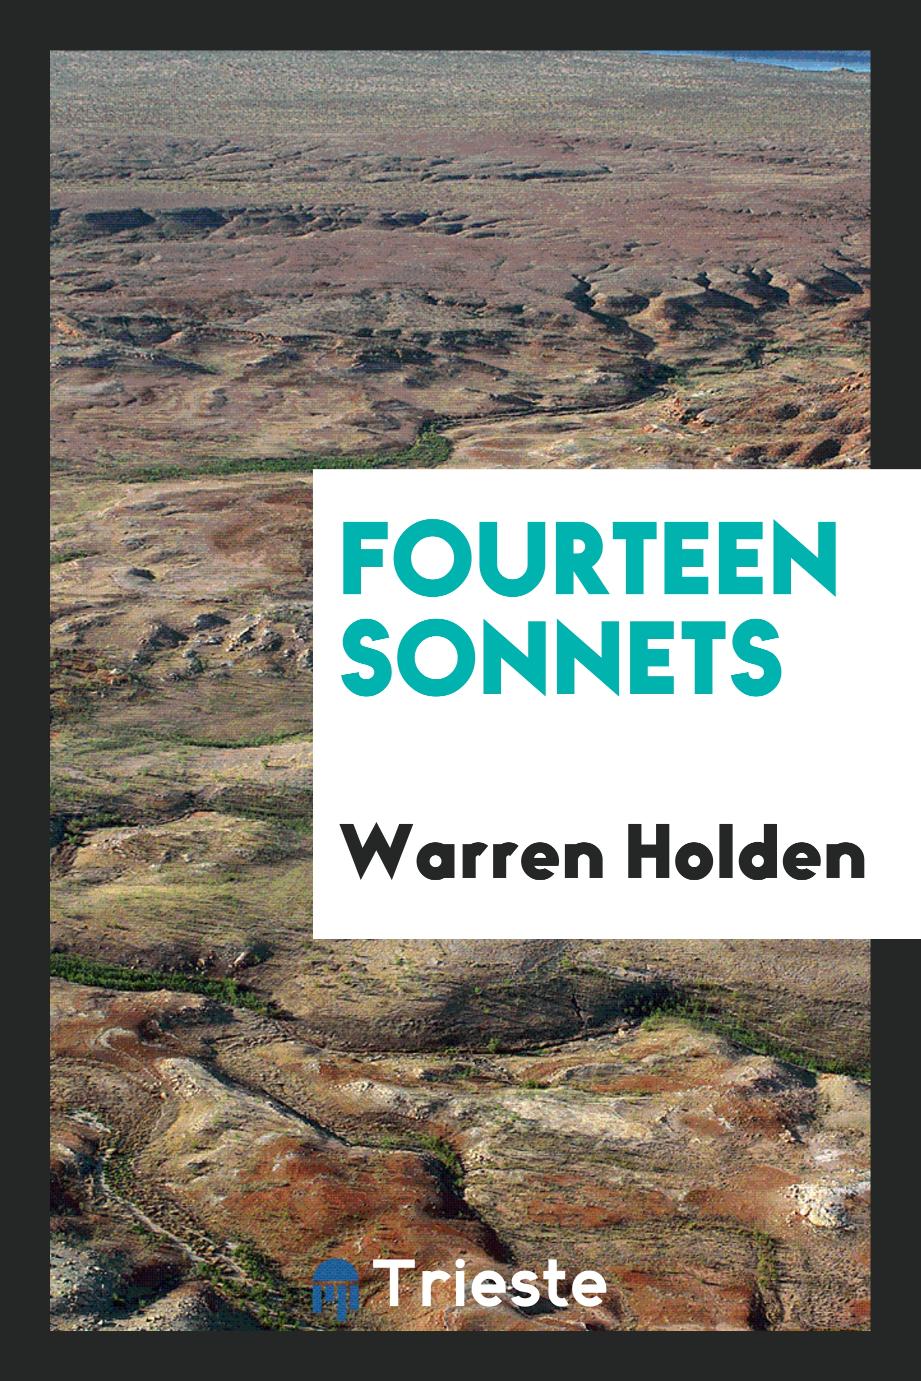 Fourteen sonnets